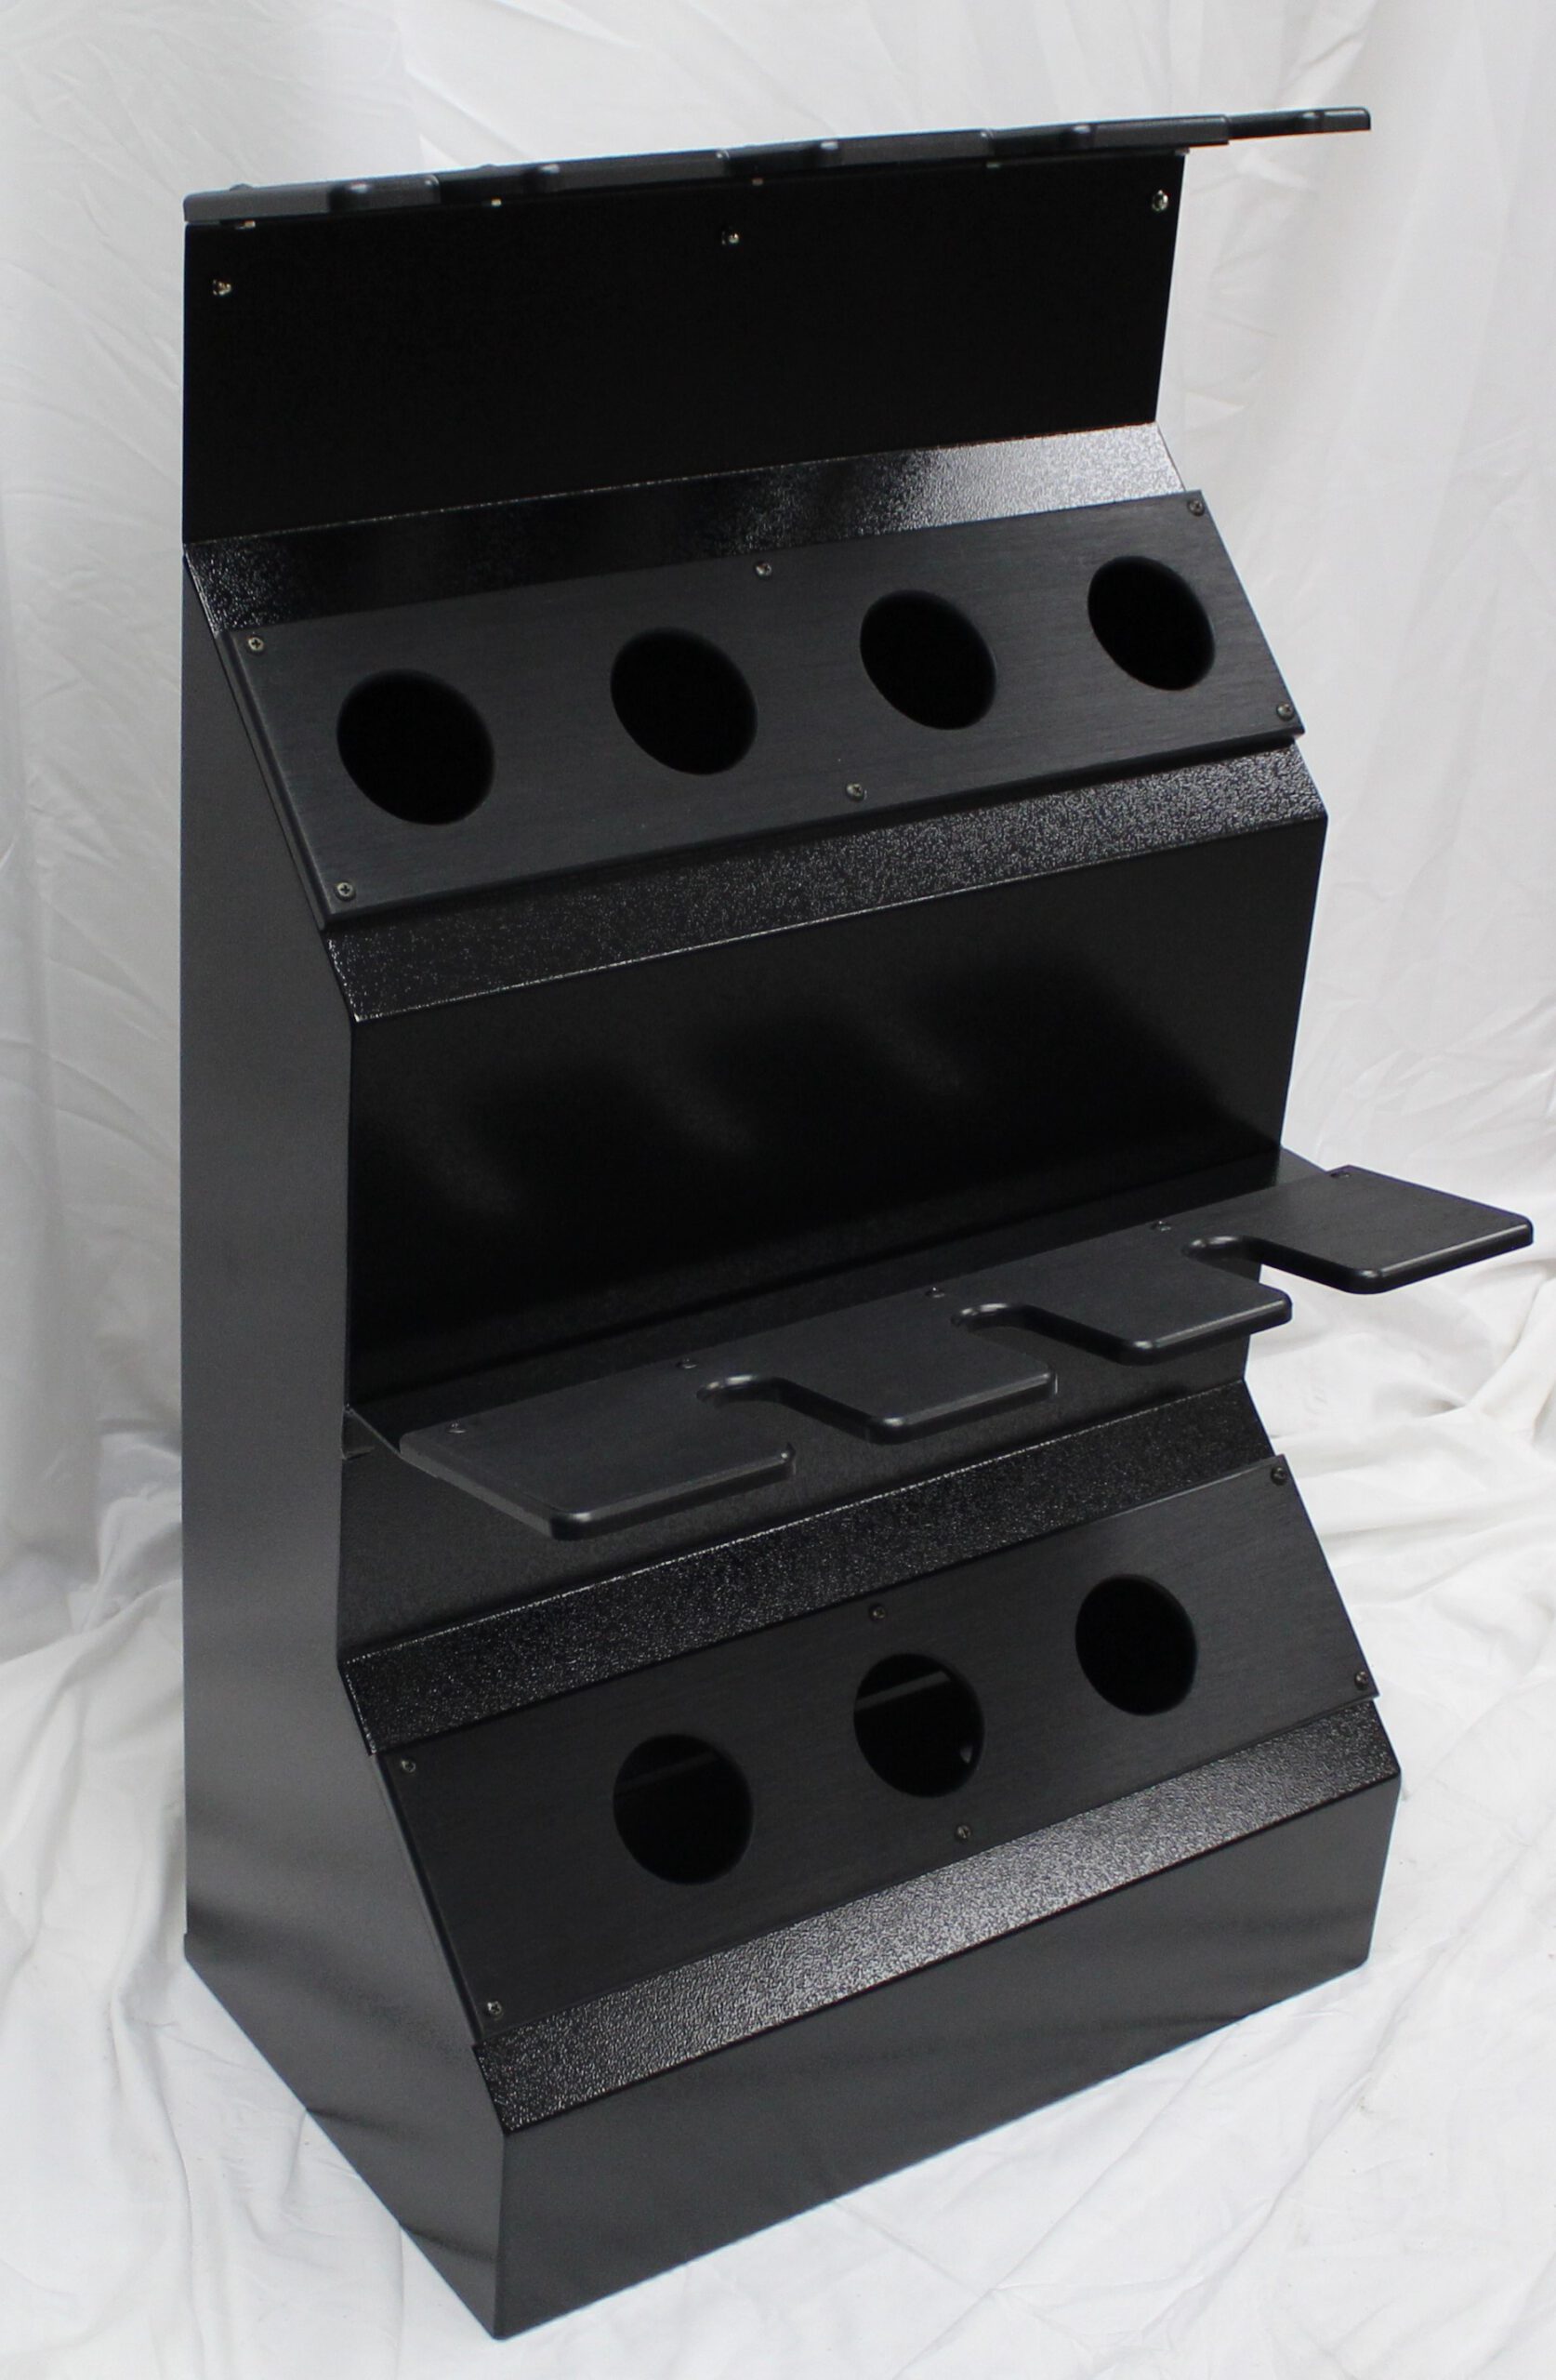 E101-7-BLK
— Lube Console (7 outlets) (Black)